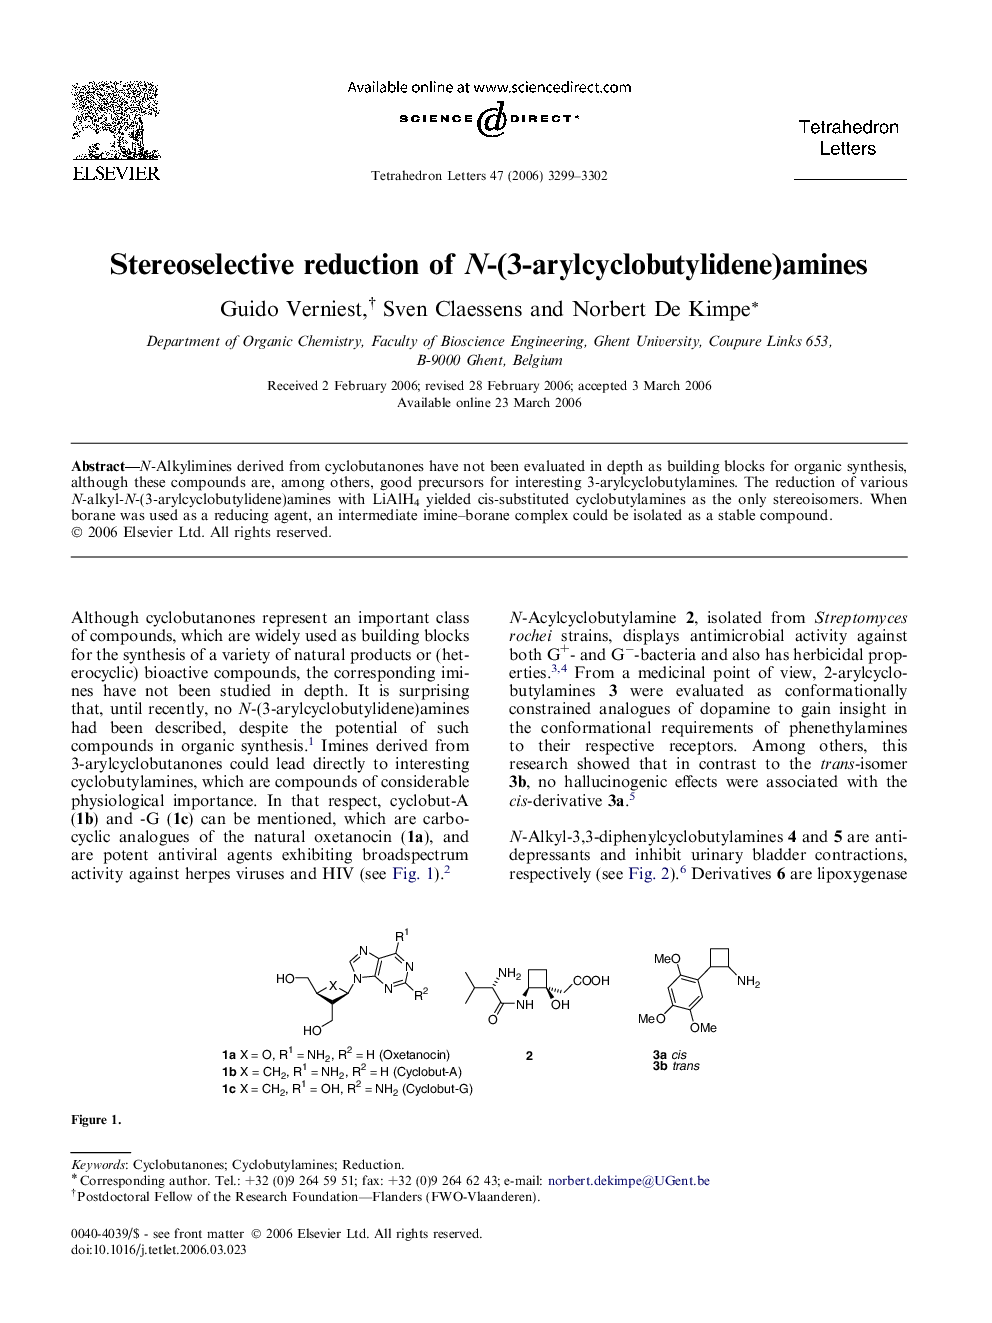 Stereoselective reduction of N-(3-arylcyclobutylidene)amines